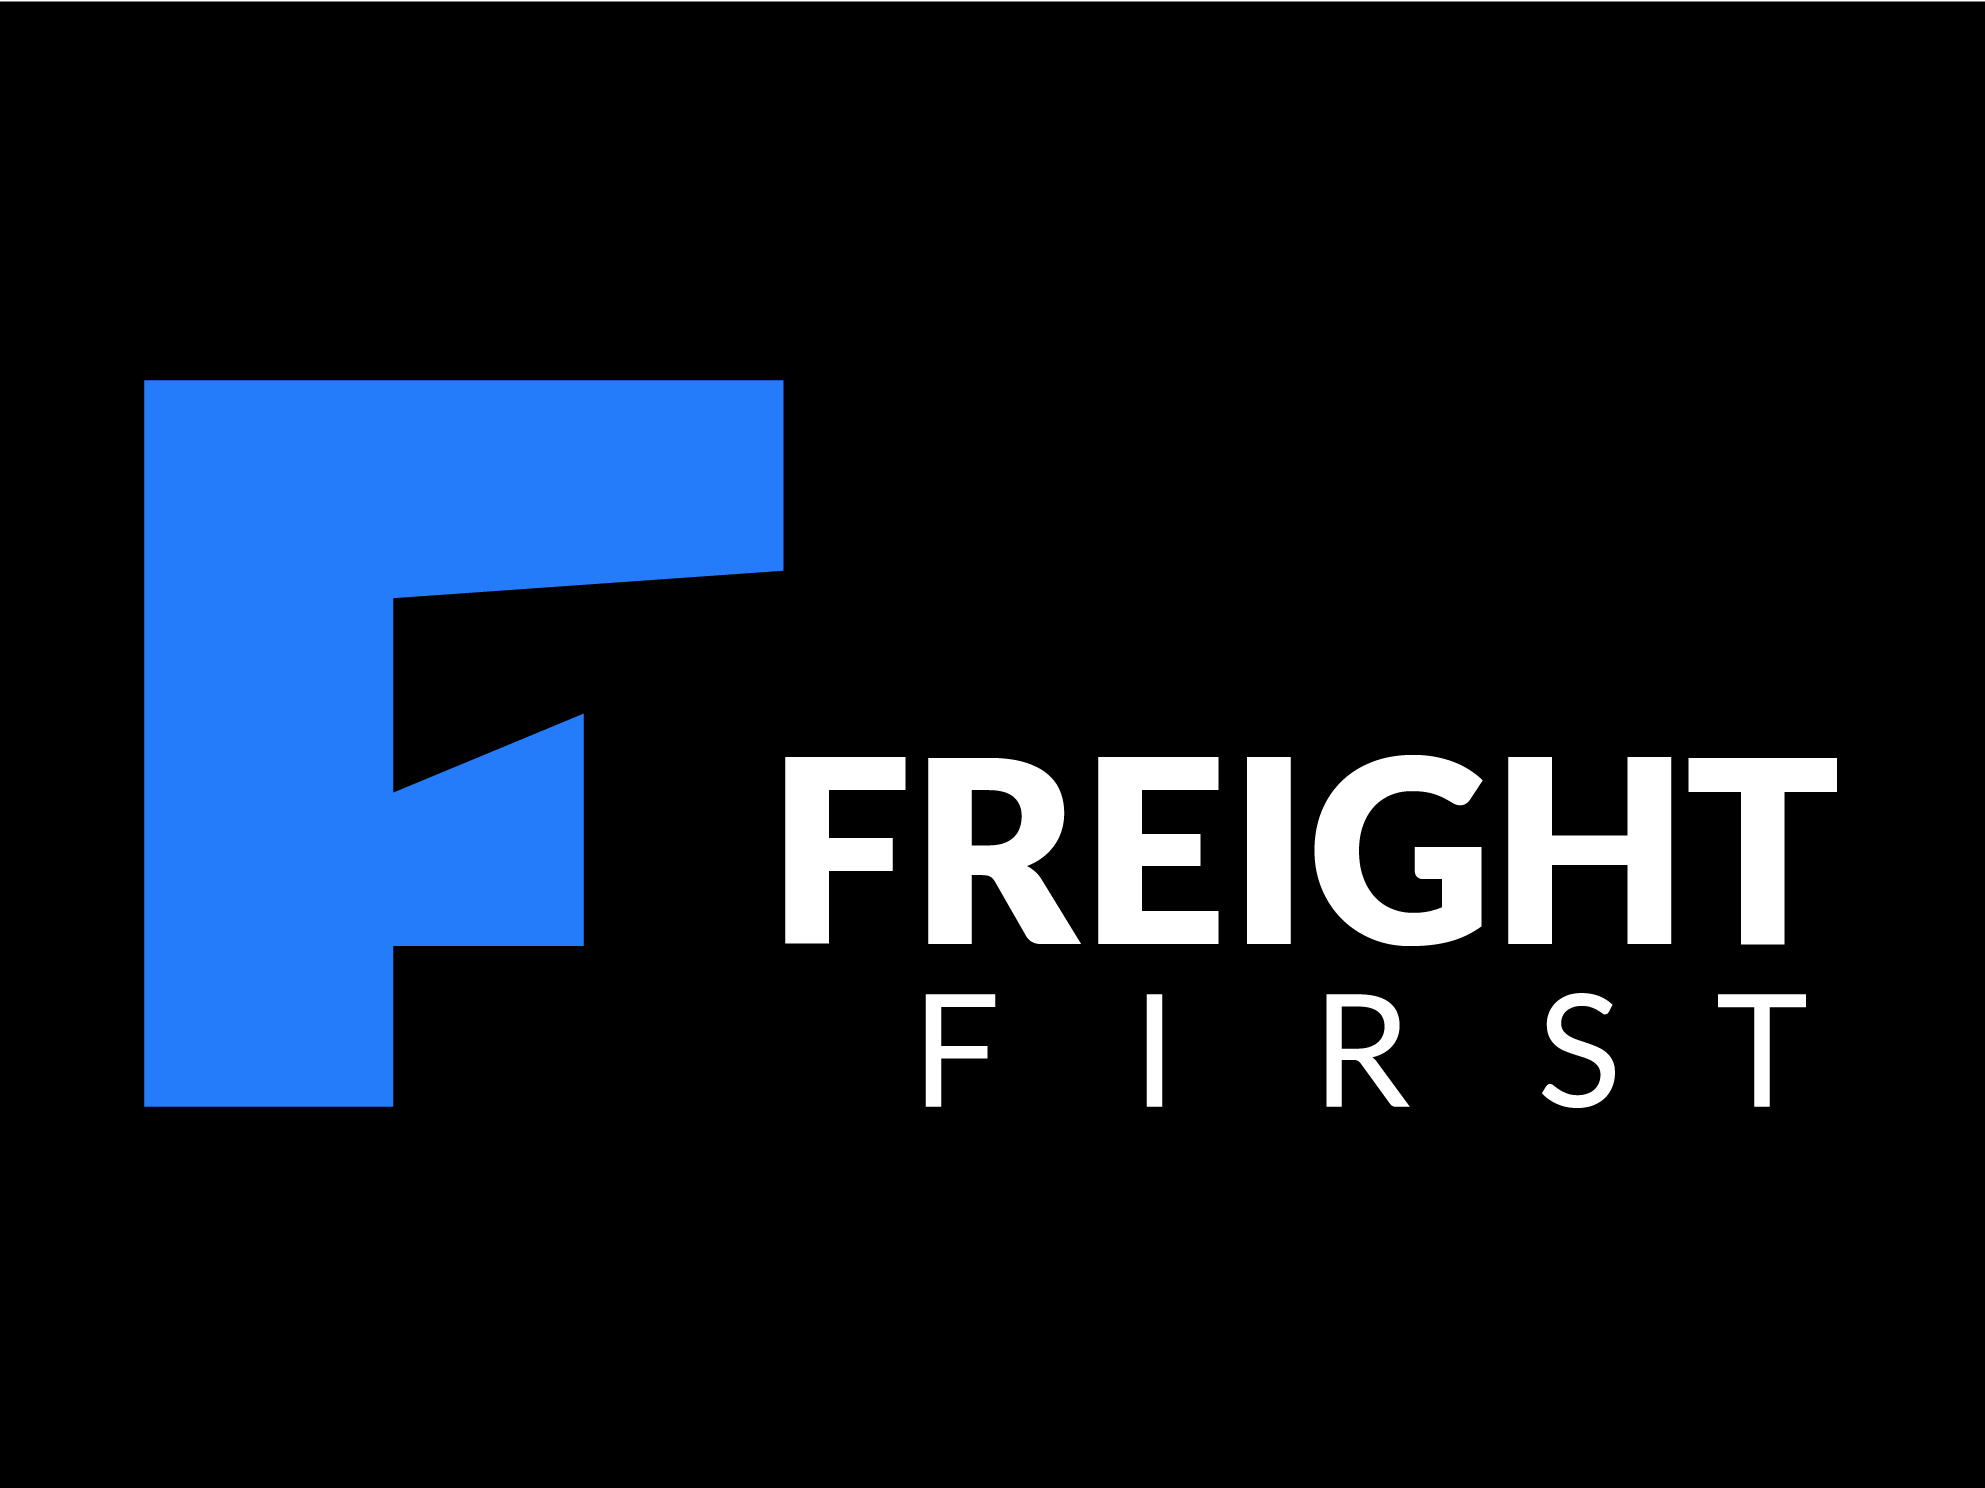 Freight First by Urška Čokelj on Dribbble